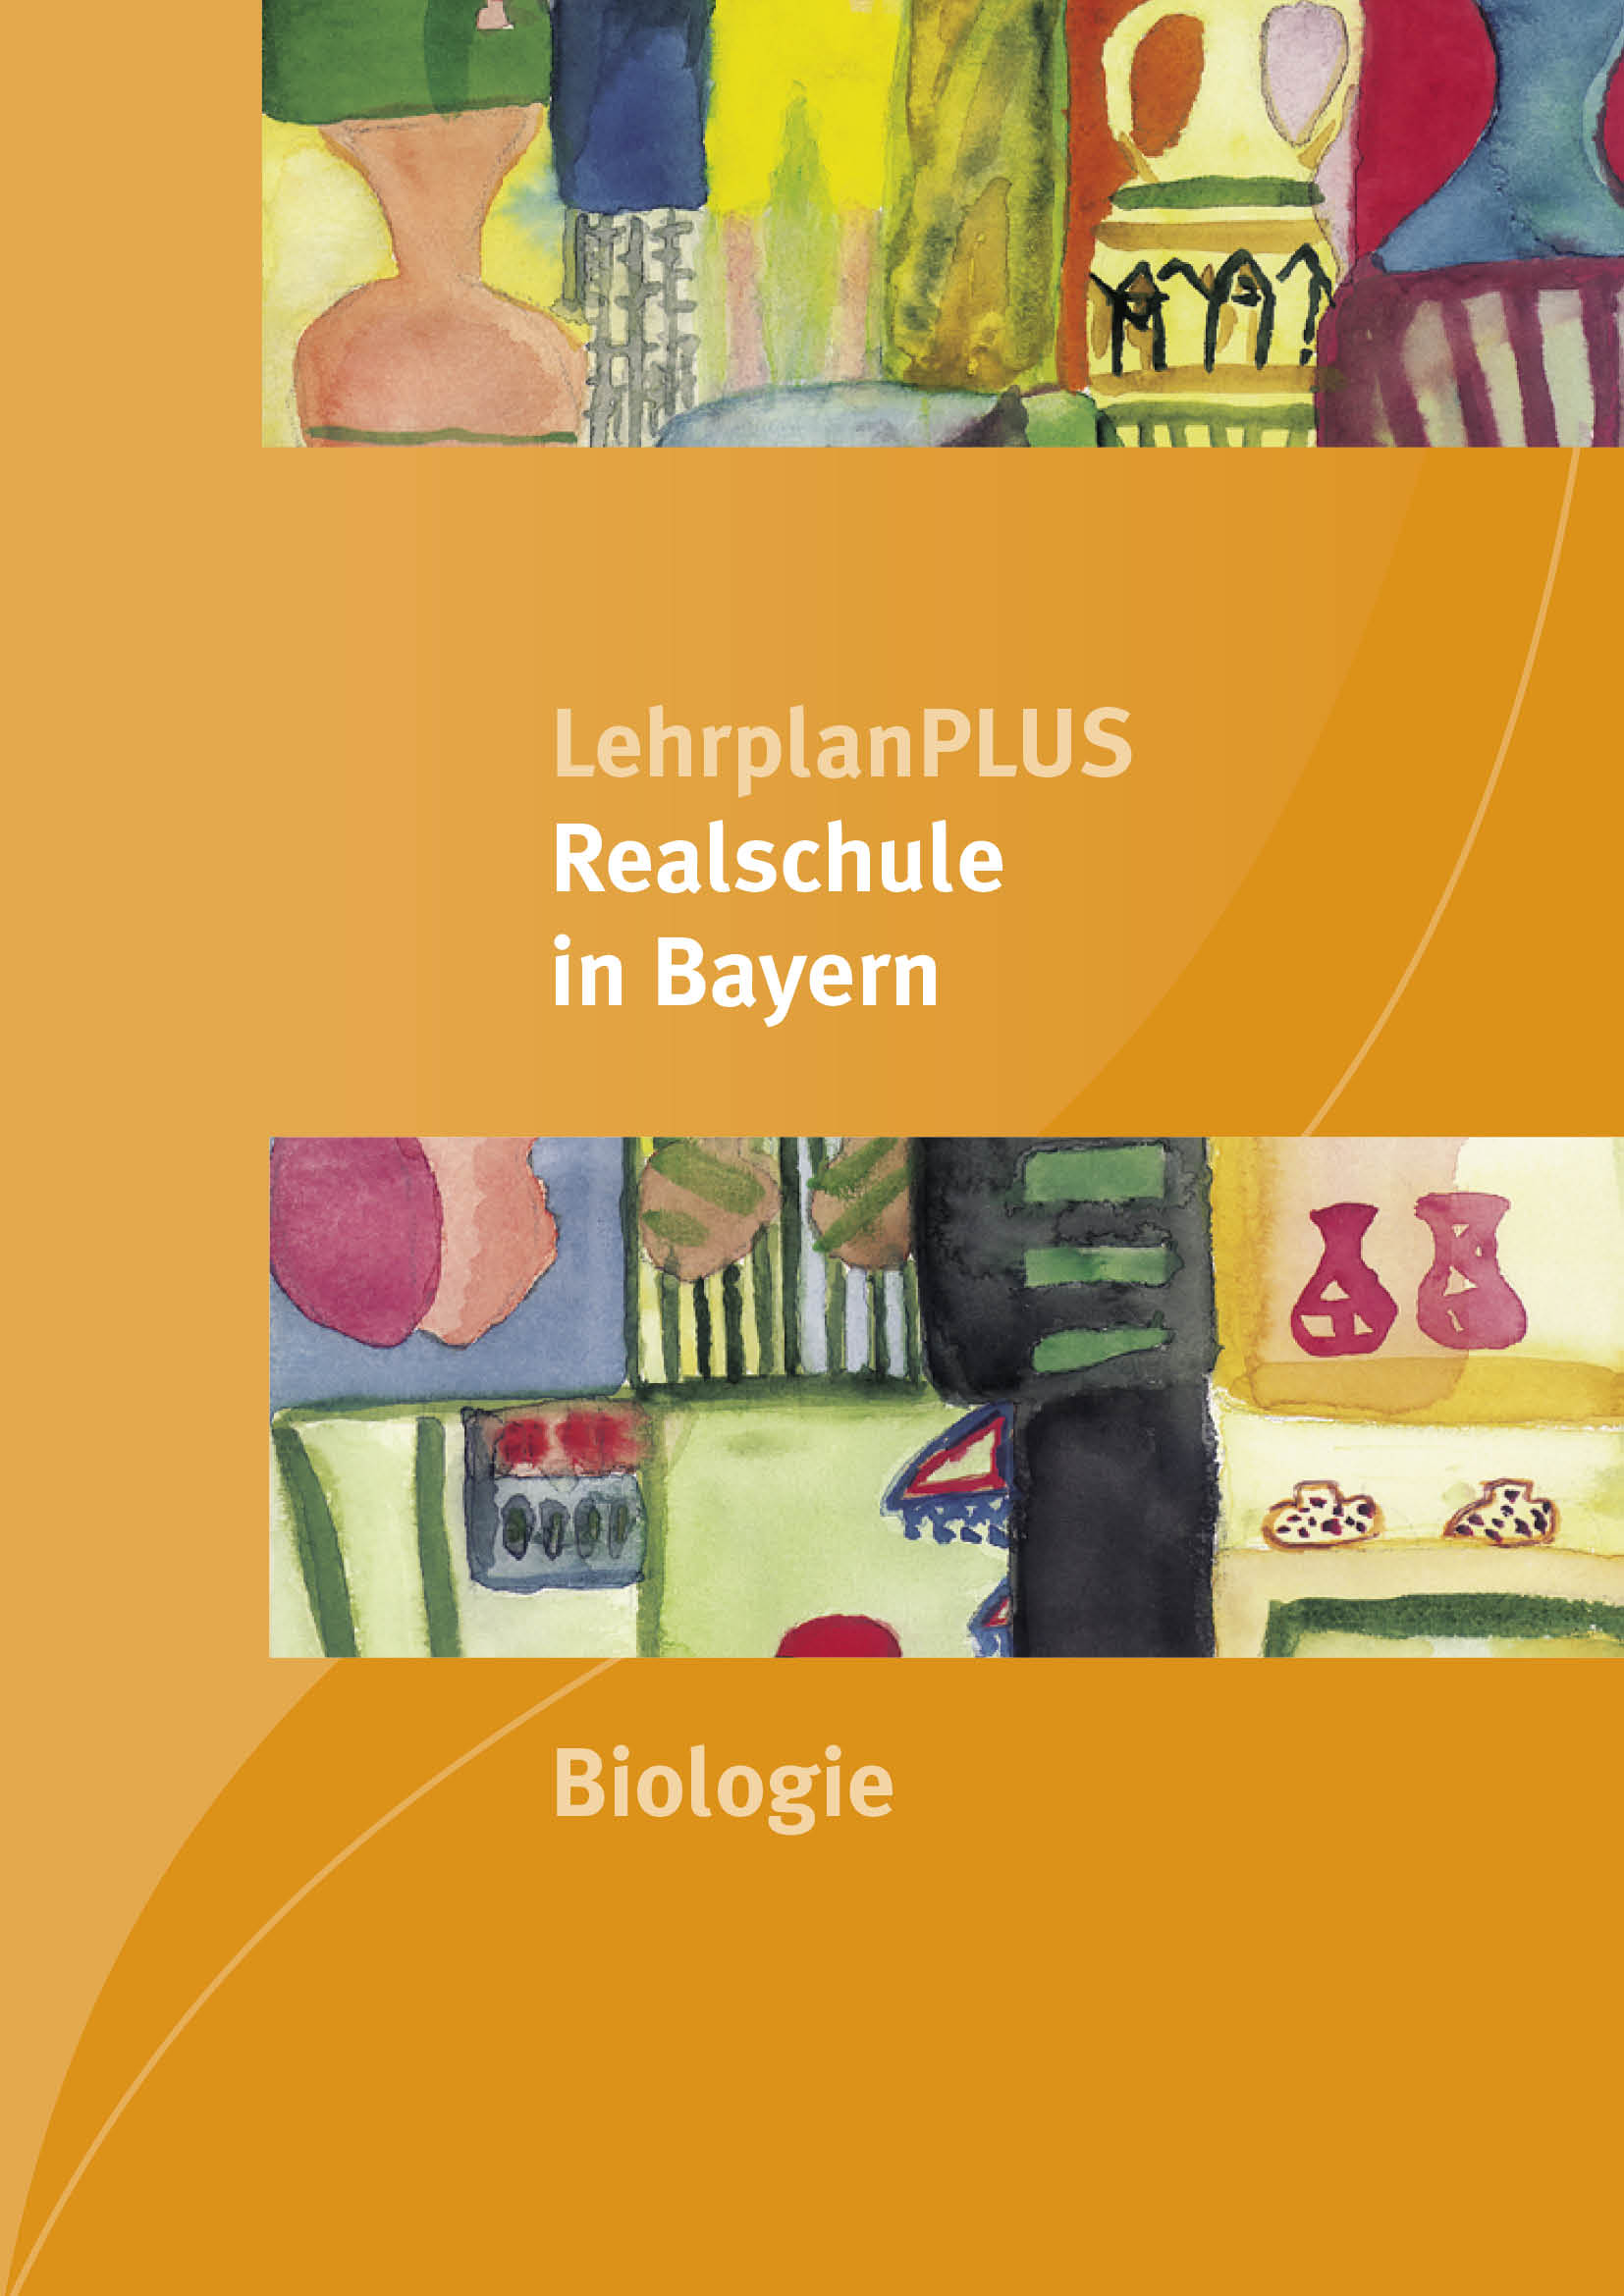 LehrplanPLUS Realschule in Bayern - Biologie